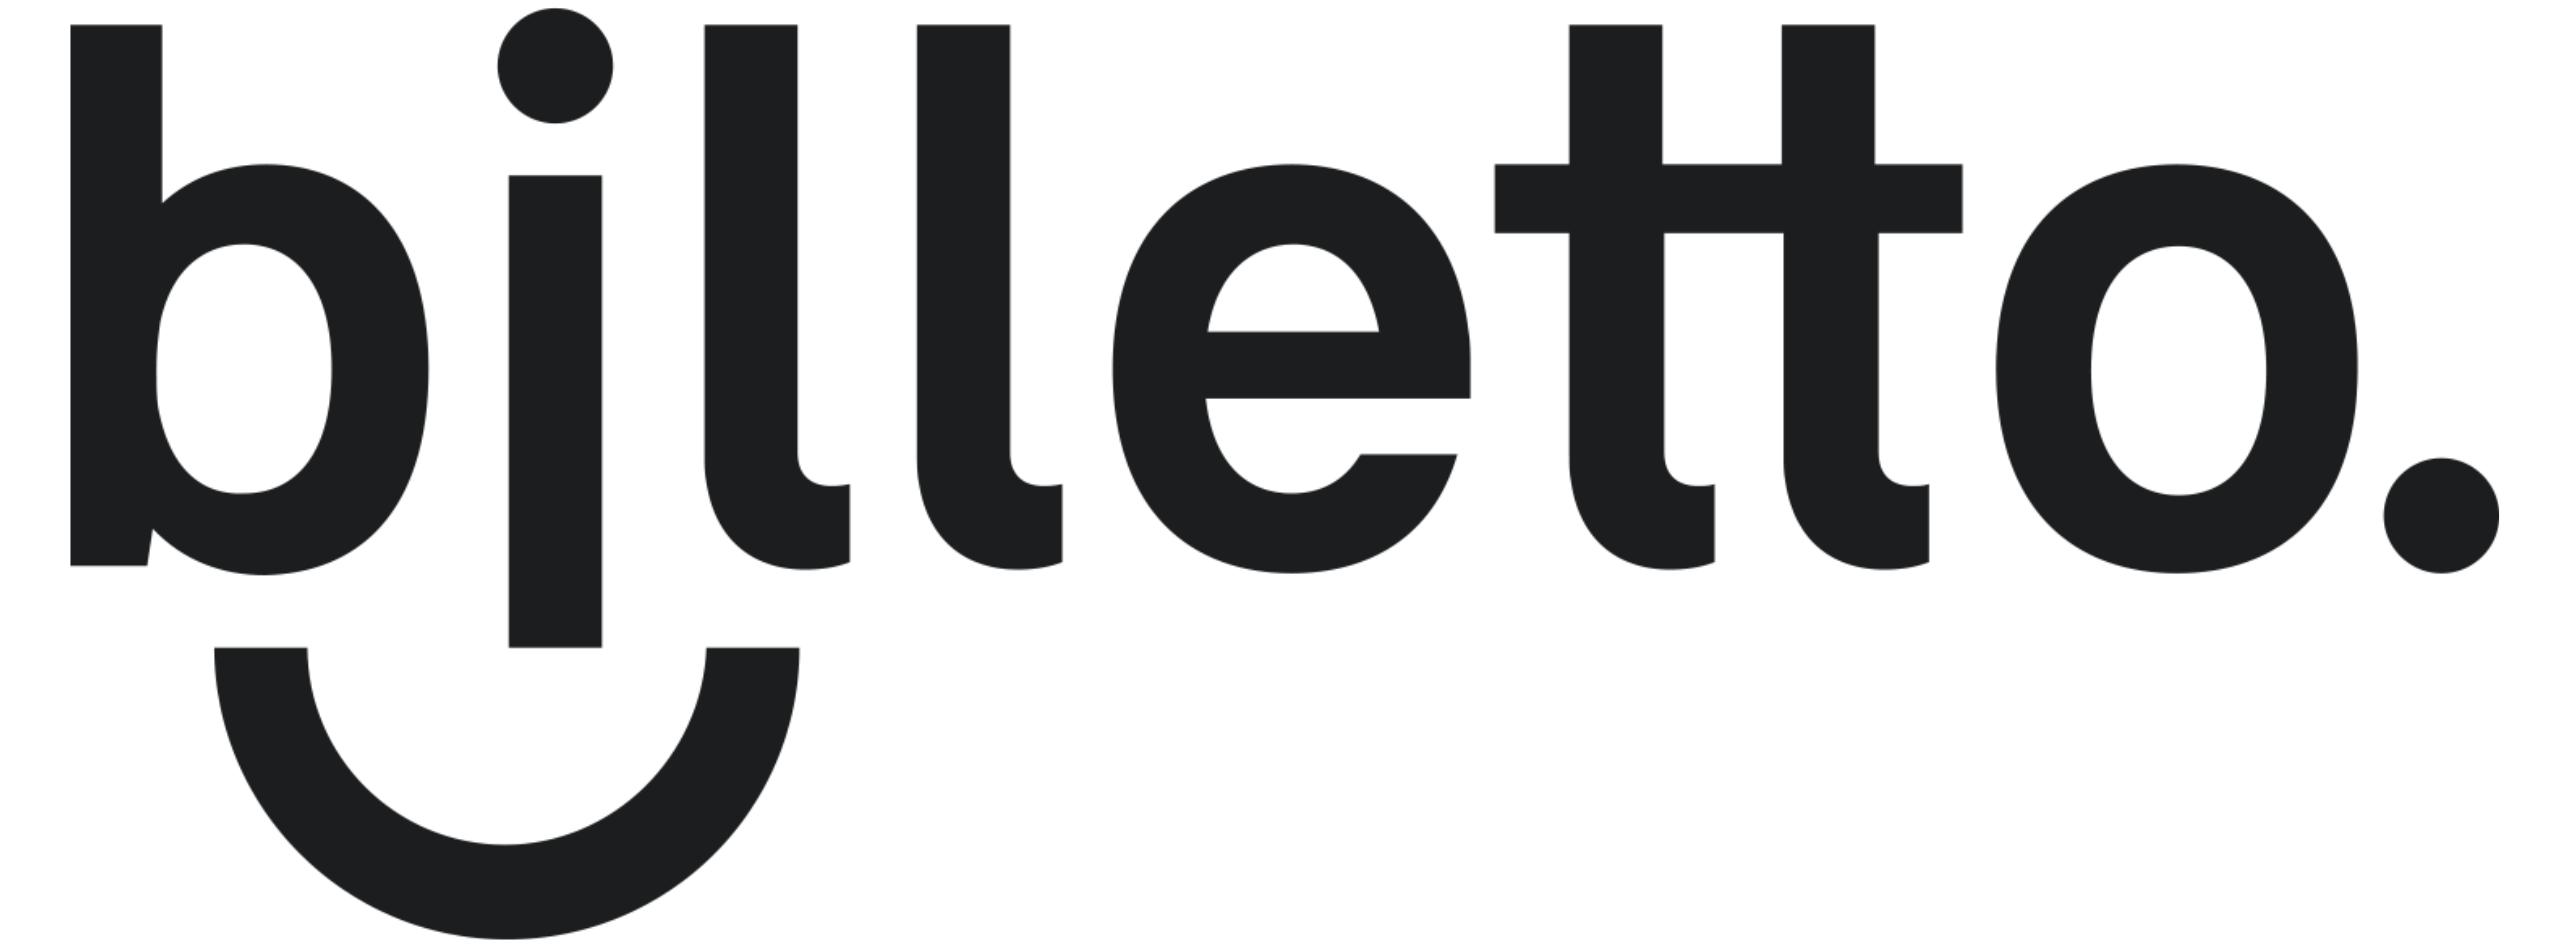 Billetto logo